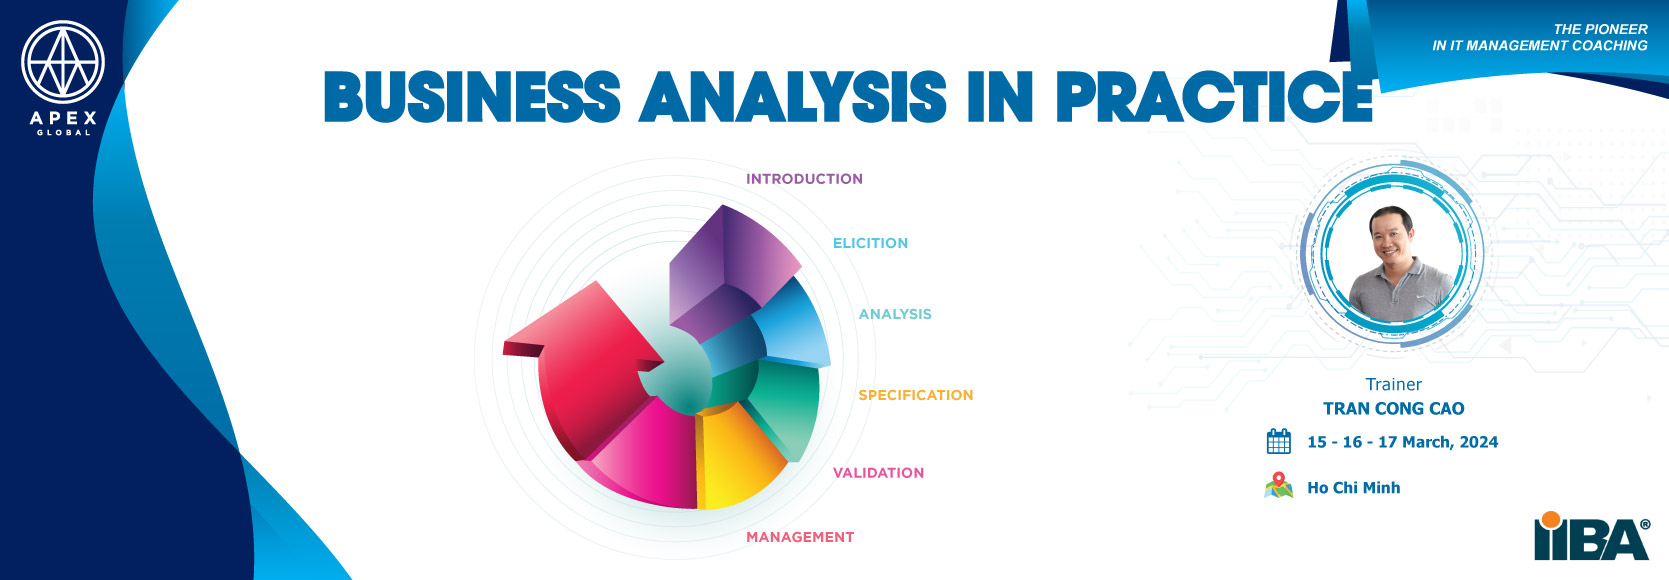 Slider-Business-Analysis-in-Practice-HCM-032024